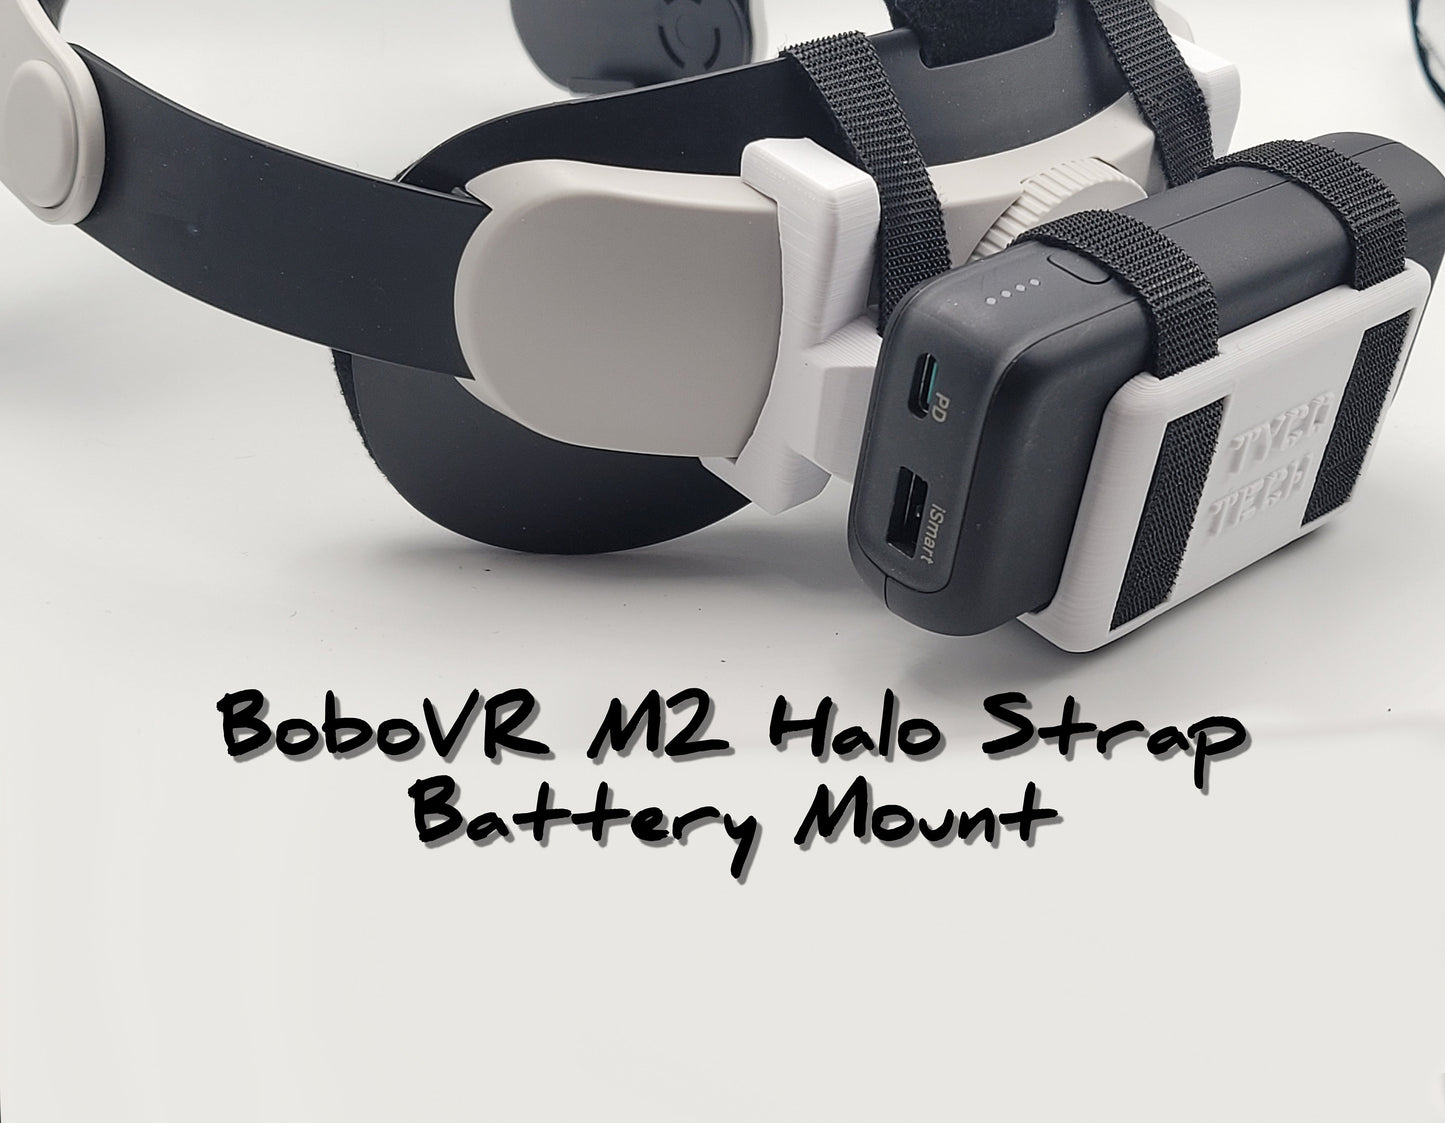 BoboVR M2 Halo Strap Universal Battery Mount